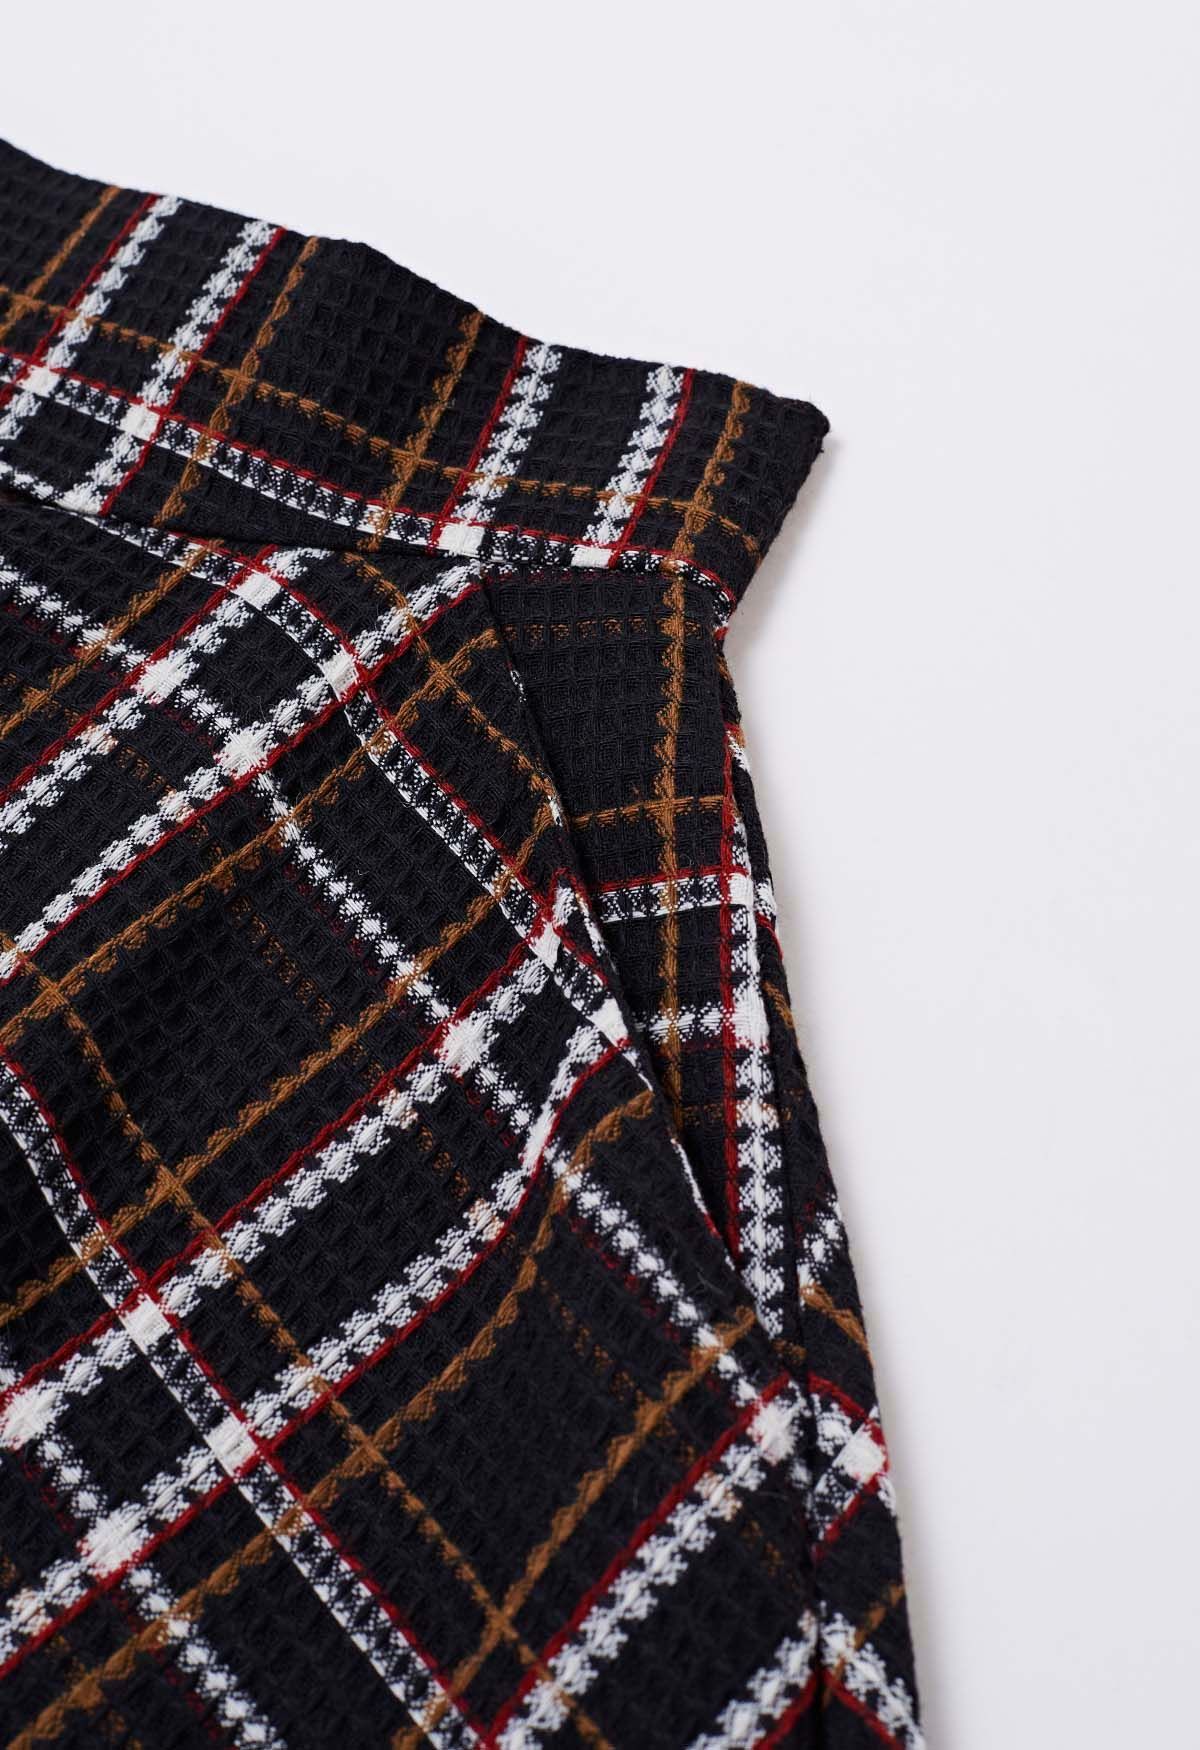 Plaid Tweed High-Waist A-Line Midi Skirt in Black